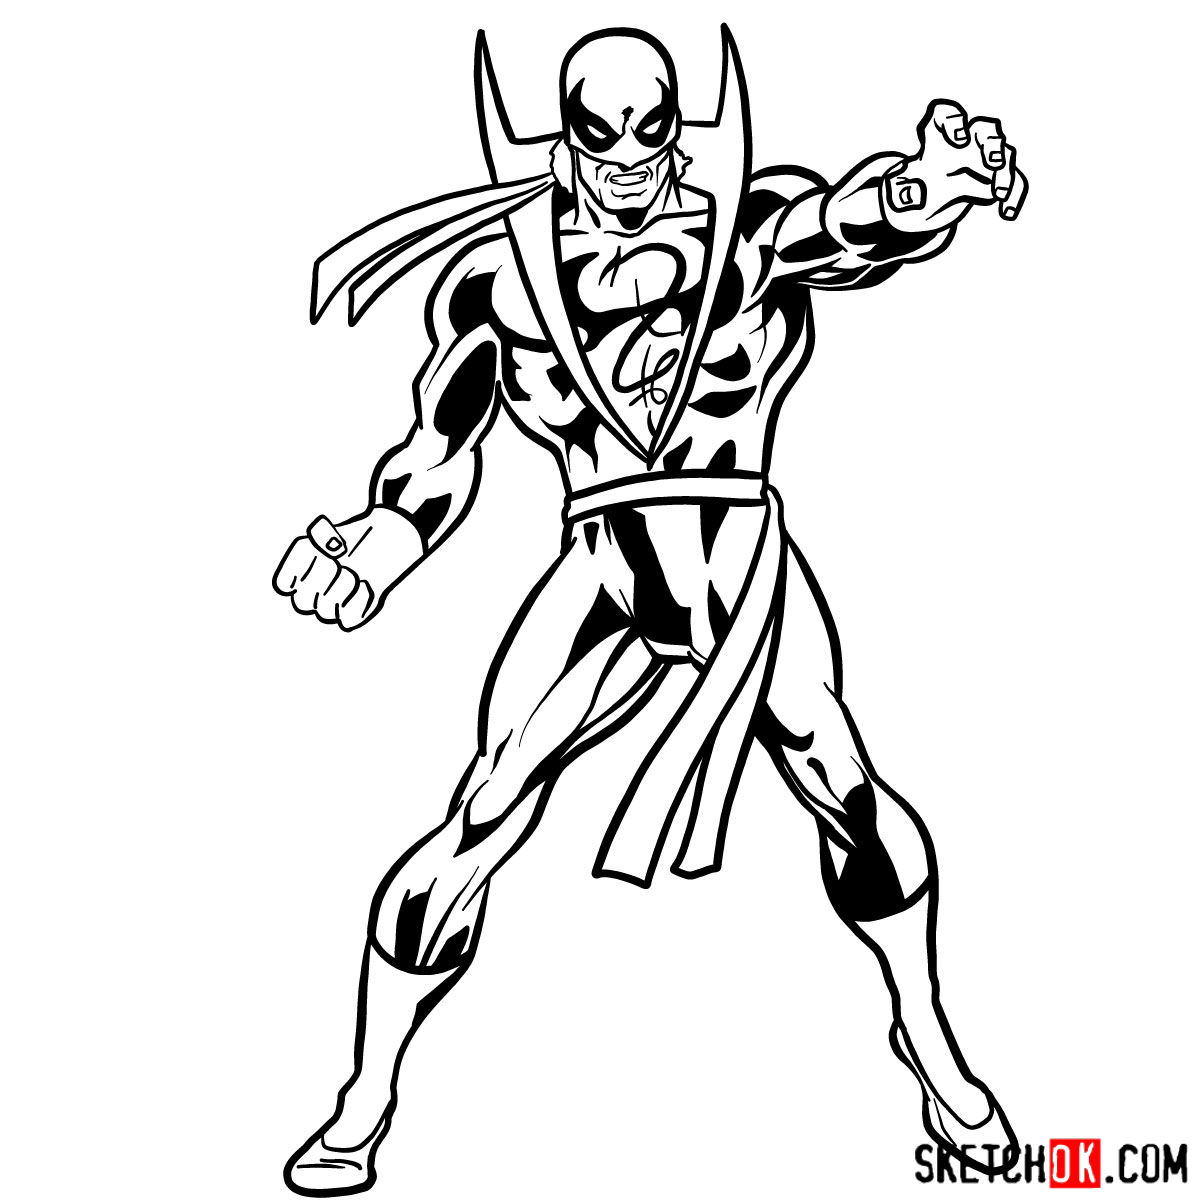 How to draw Iron Fist - Marvel's superhero - step 16